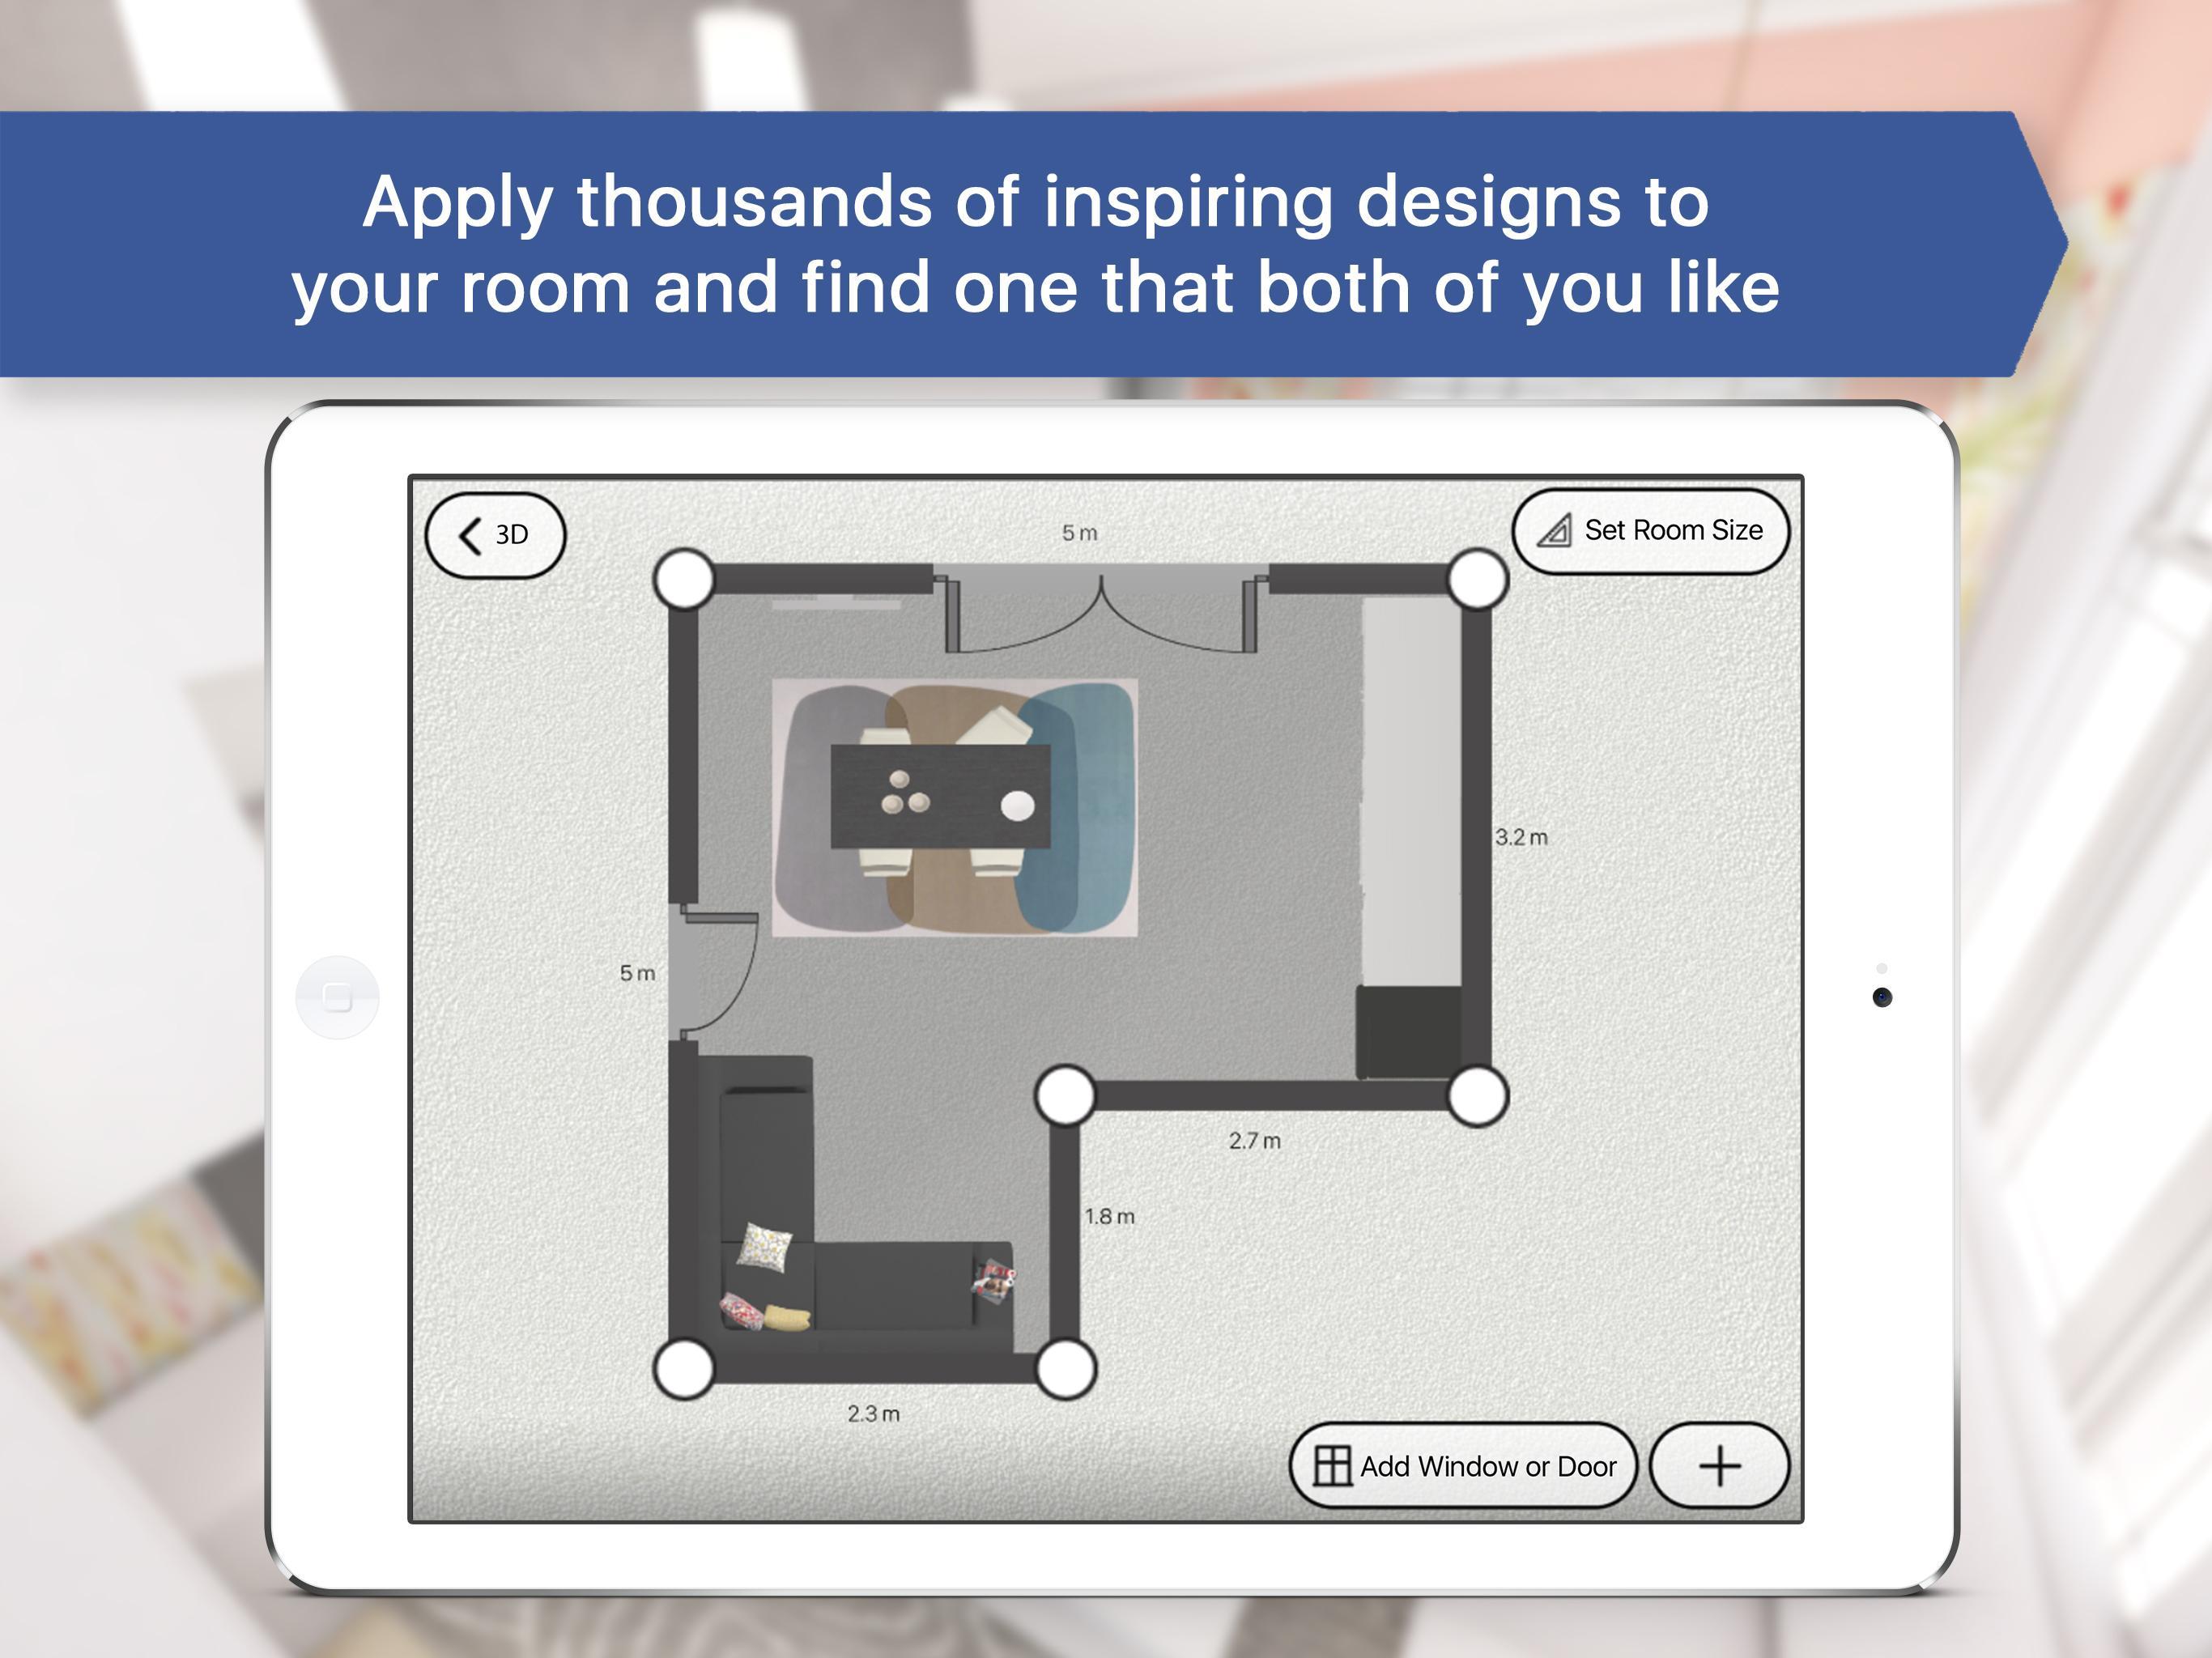 3d Living Room For Ikea Interior Design Planner Fur